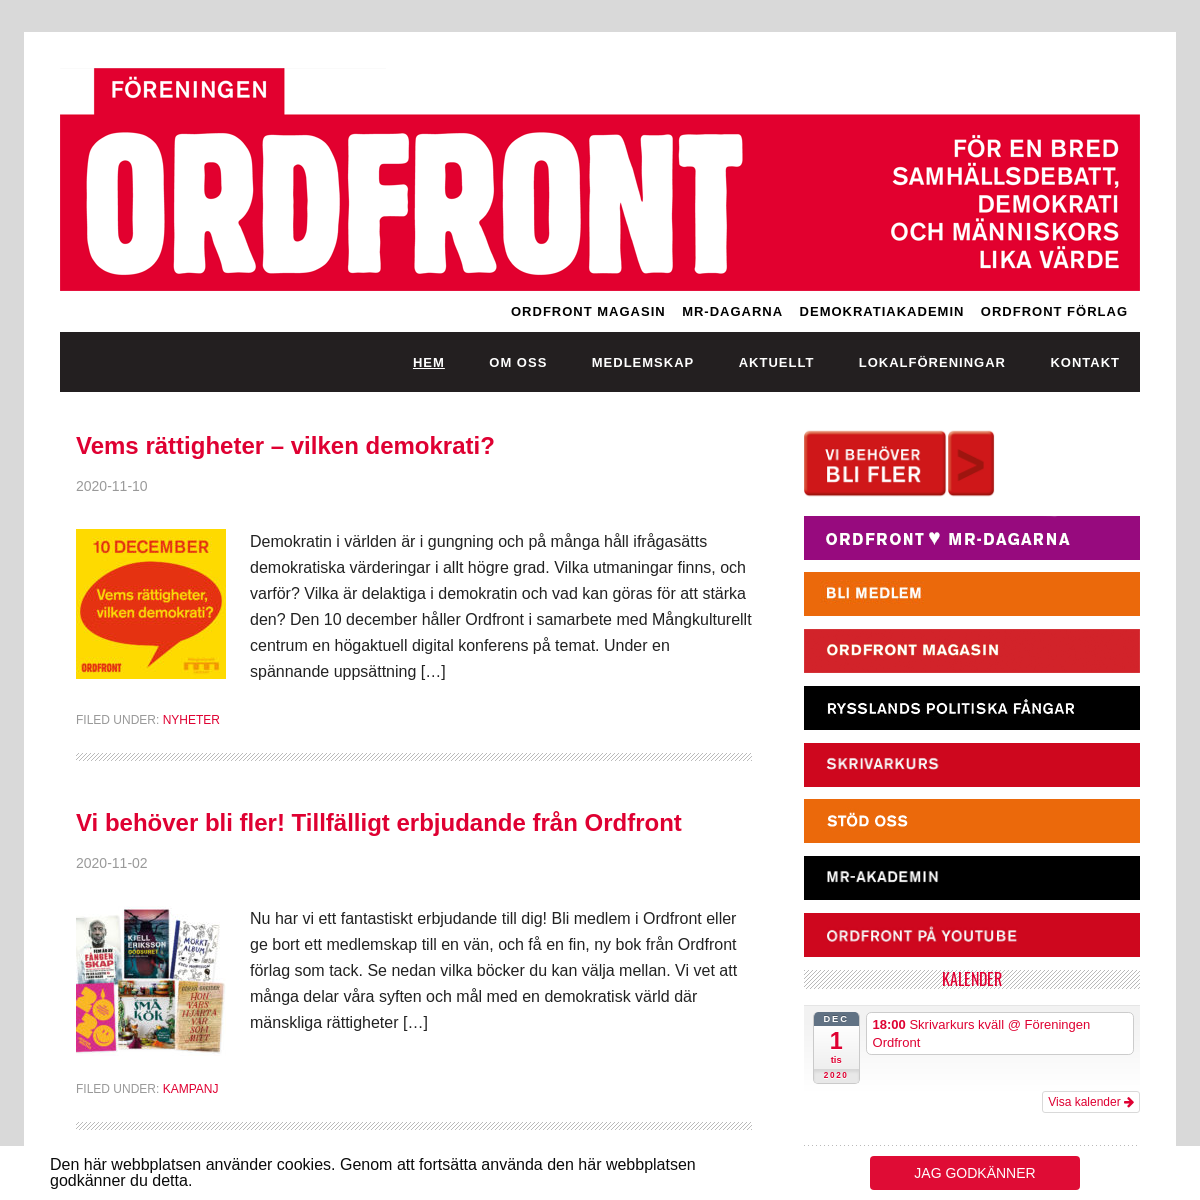 A complete backup of ordfront.se